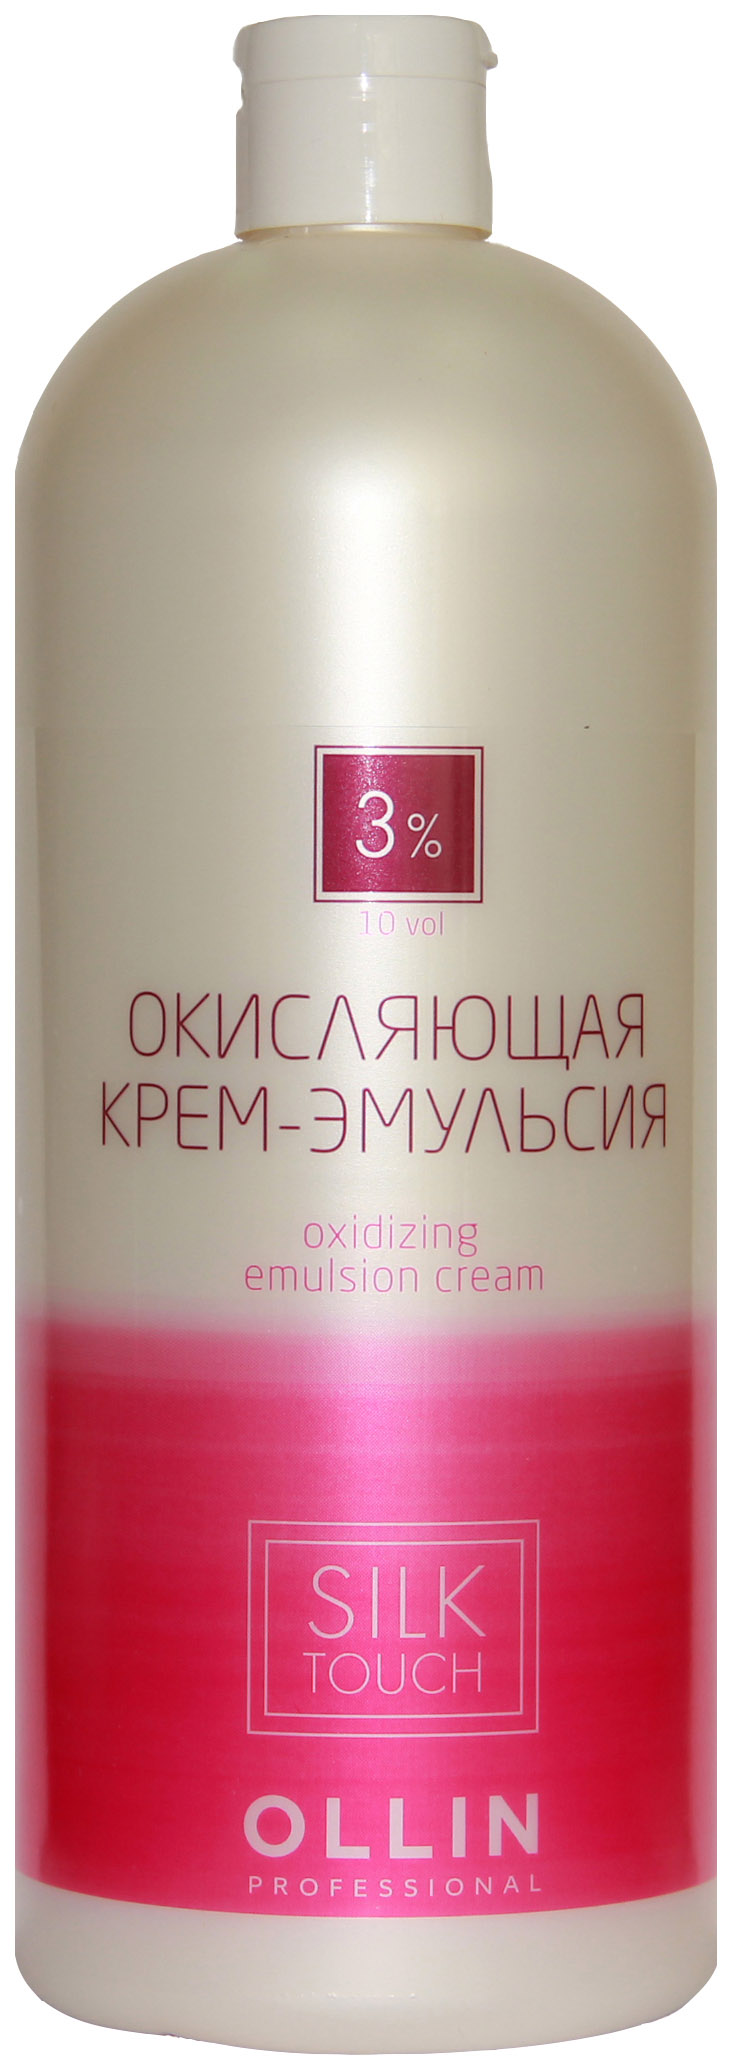 Проявитель Ollin Professional Silk Touch 3% 1000 мл крем проявитель pro oxyde 20vol 6%